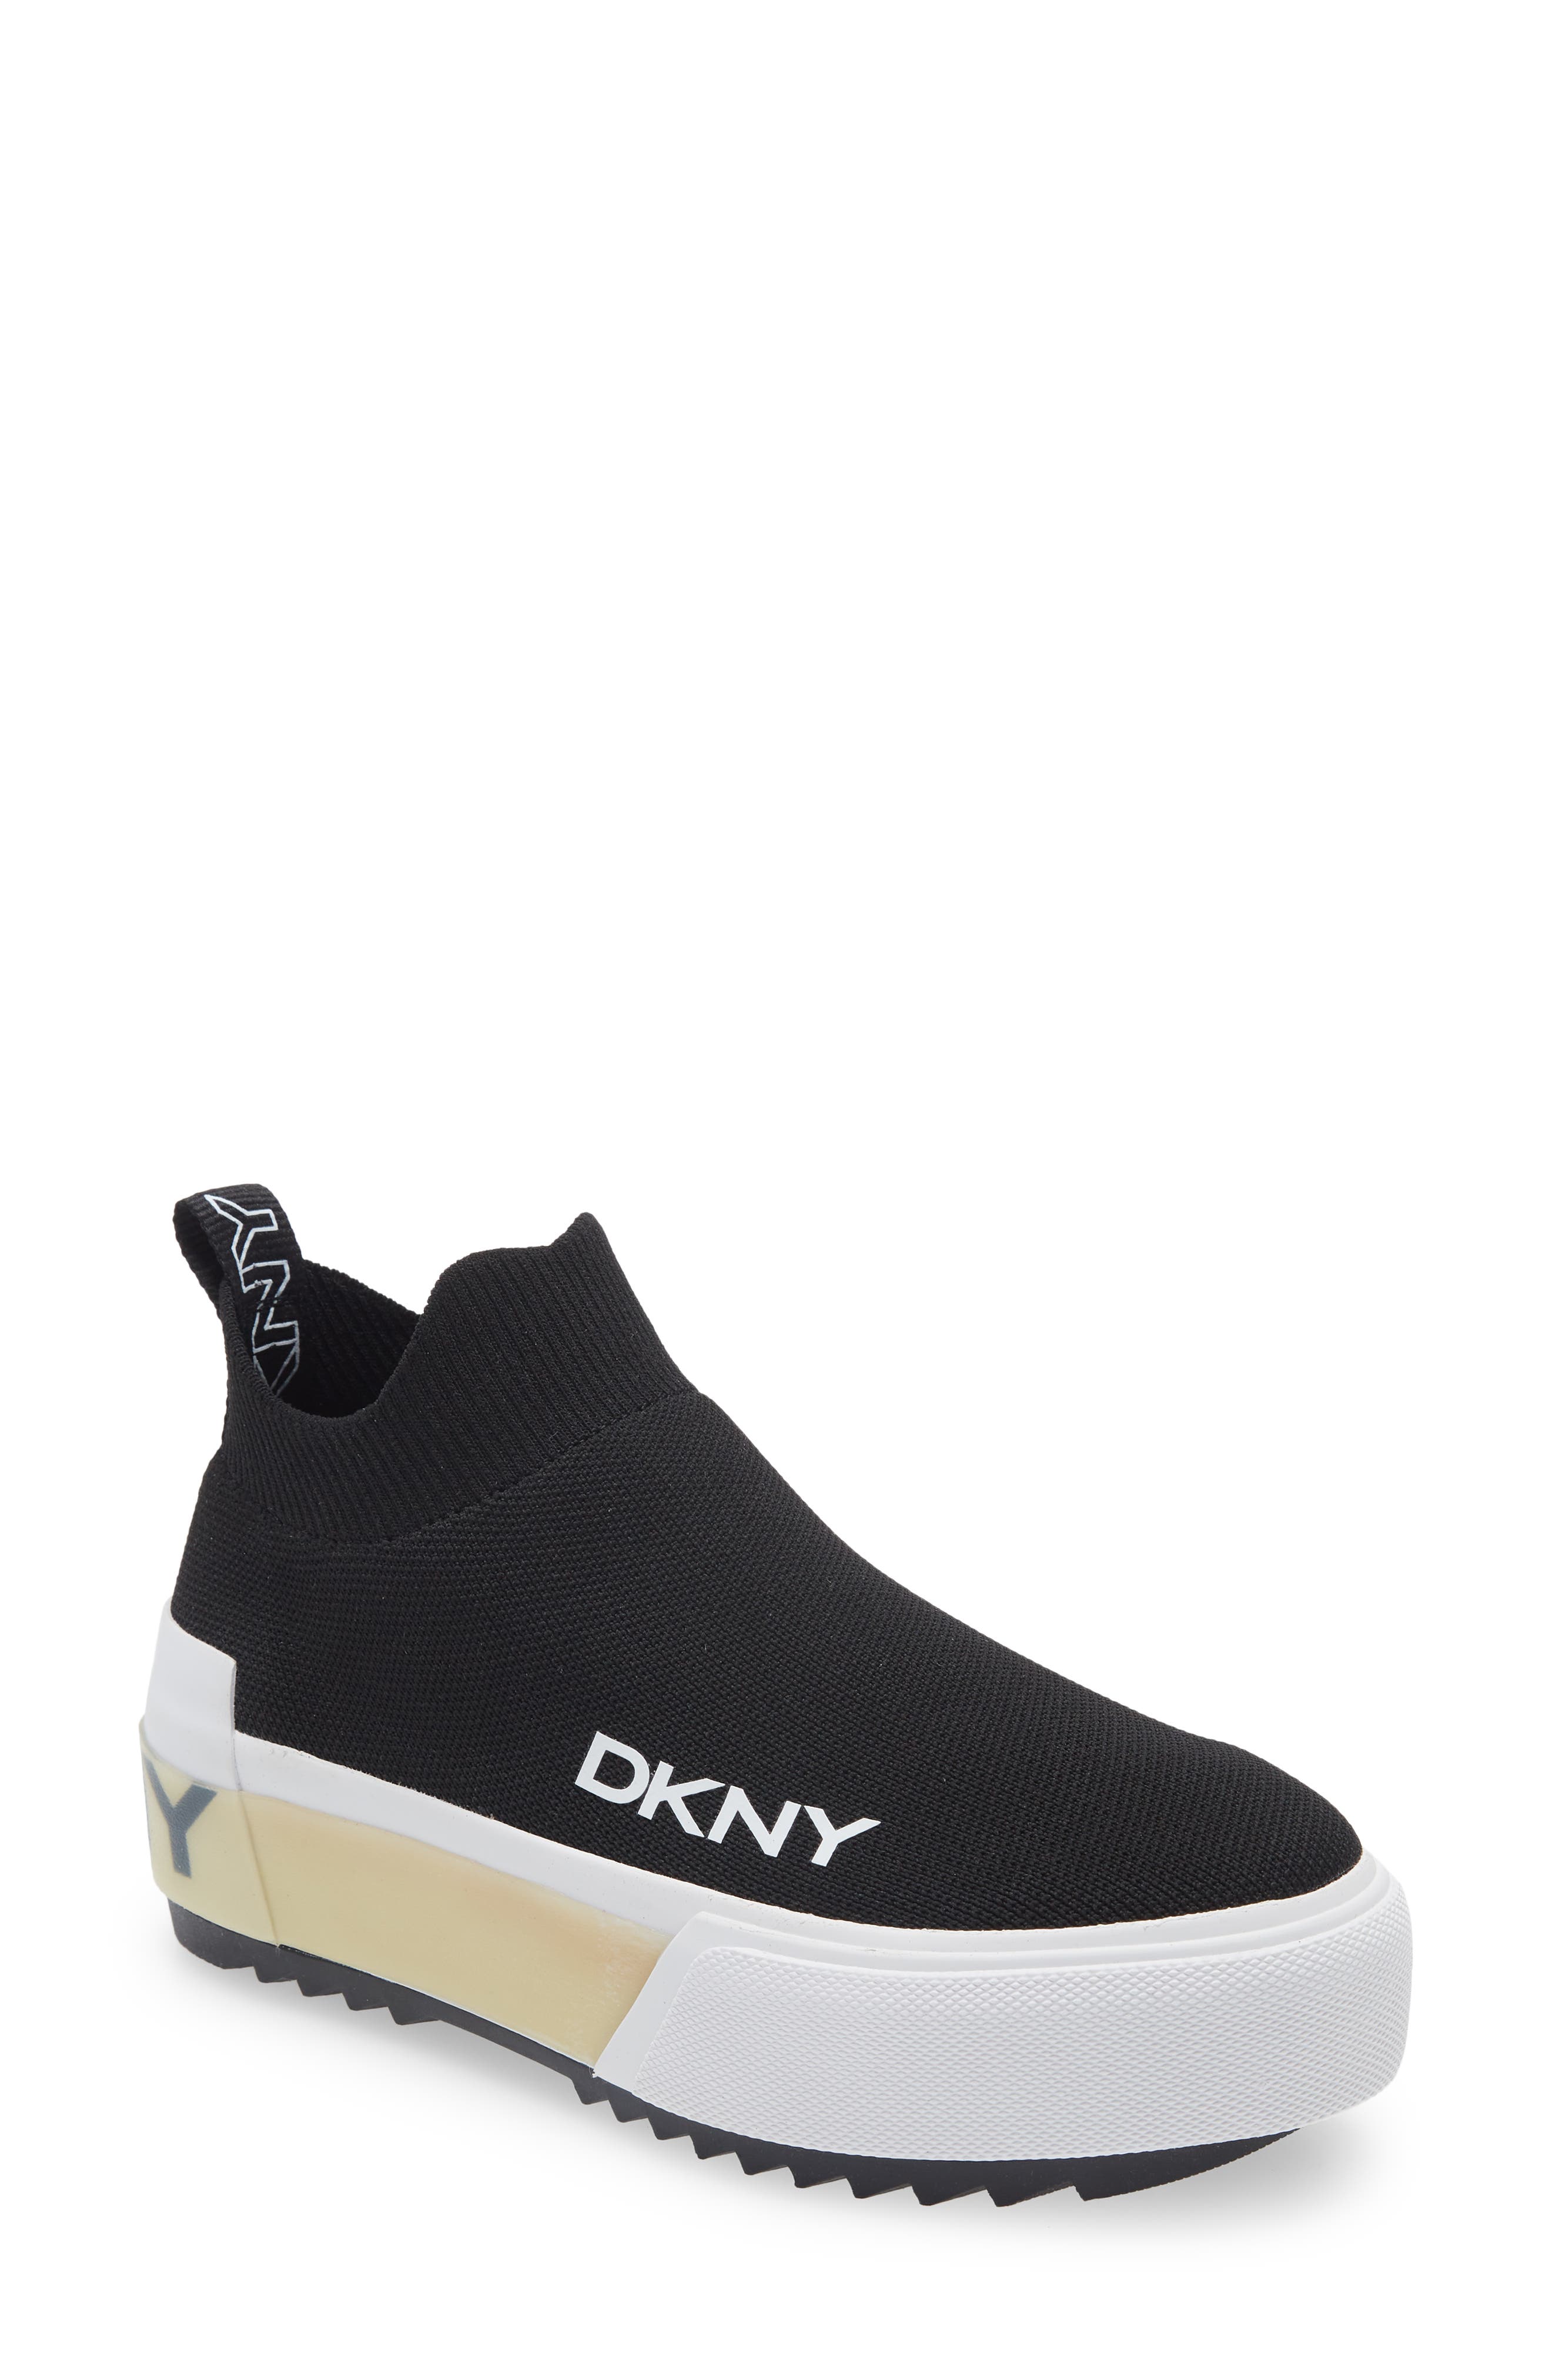 DKNY Viven Slip-On Knit Platform Sneaker in Black/White at Nordstrom, Size 6